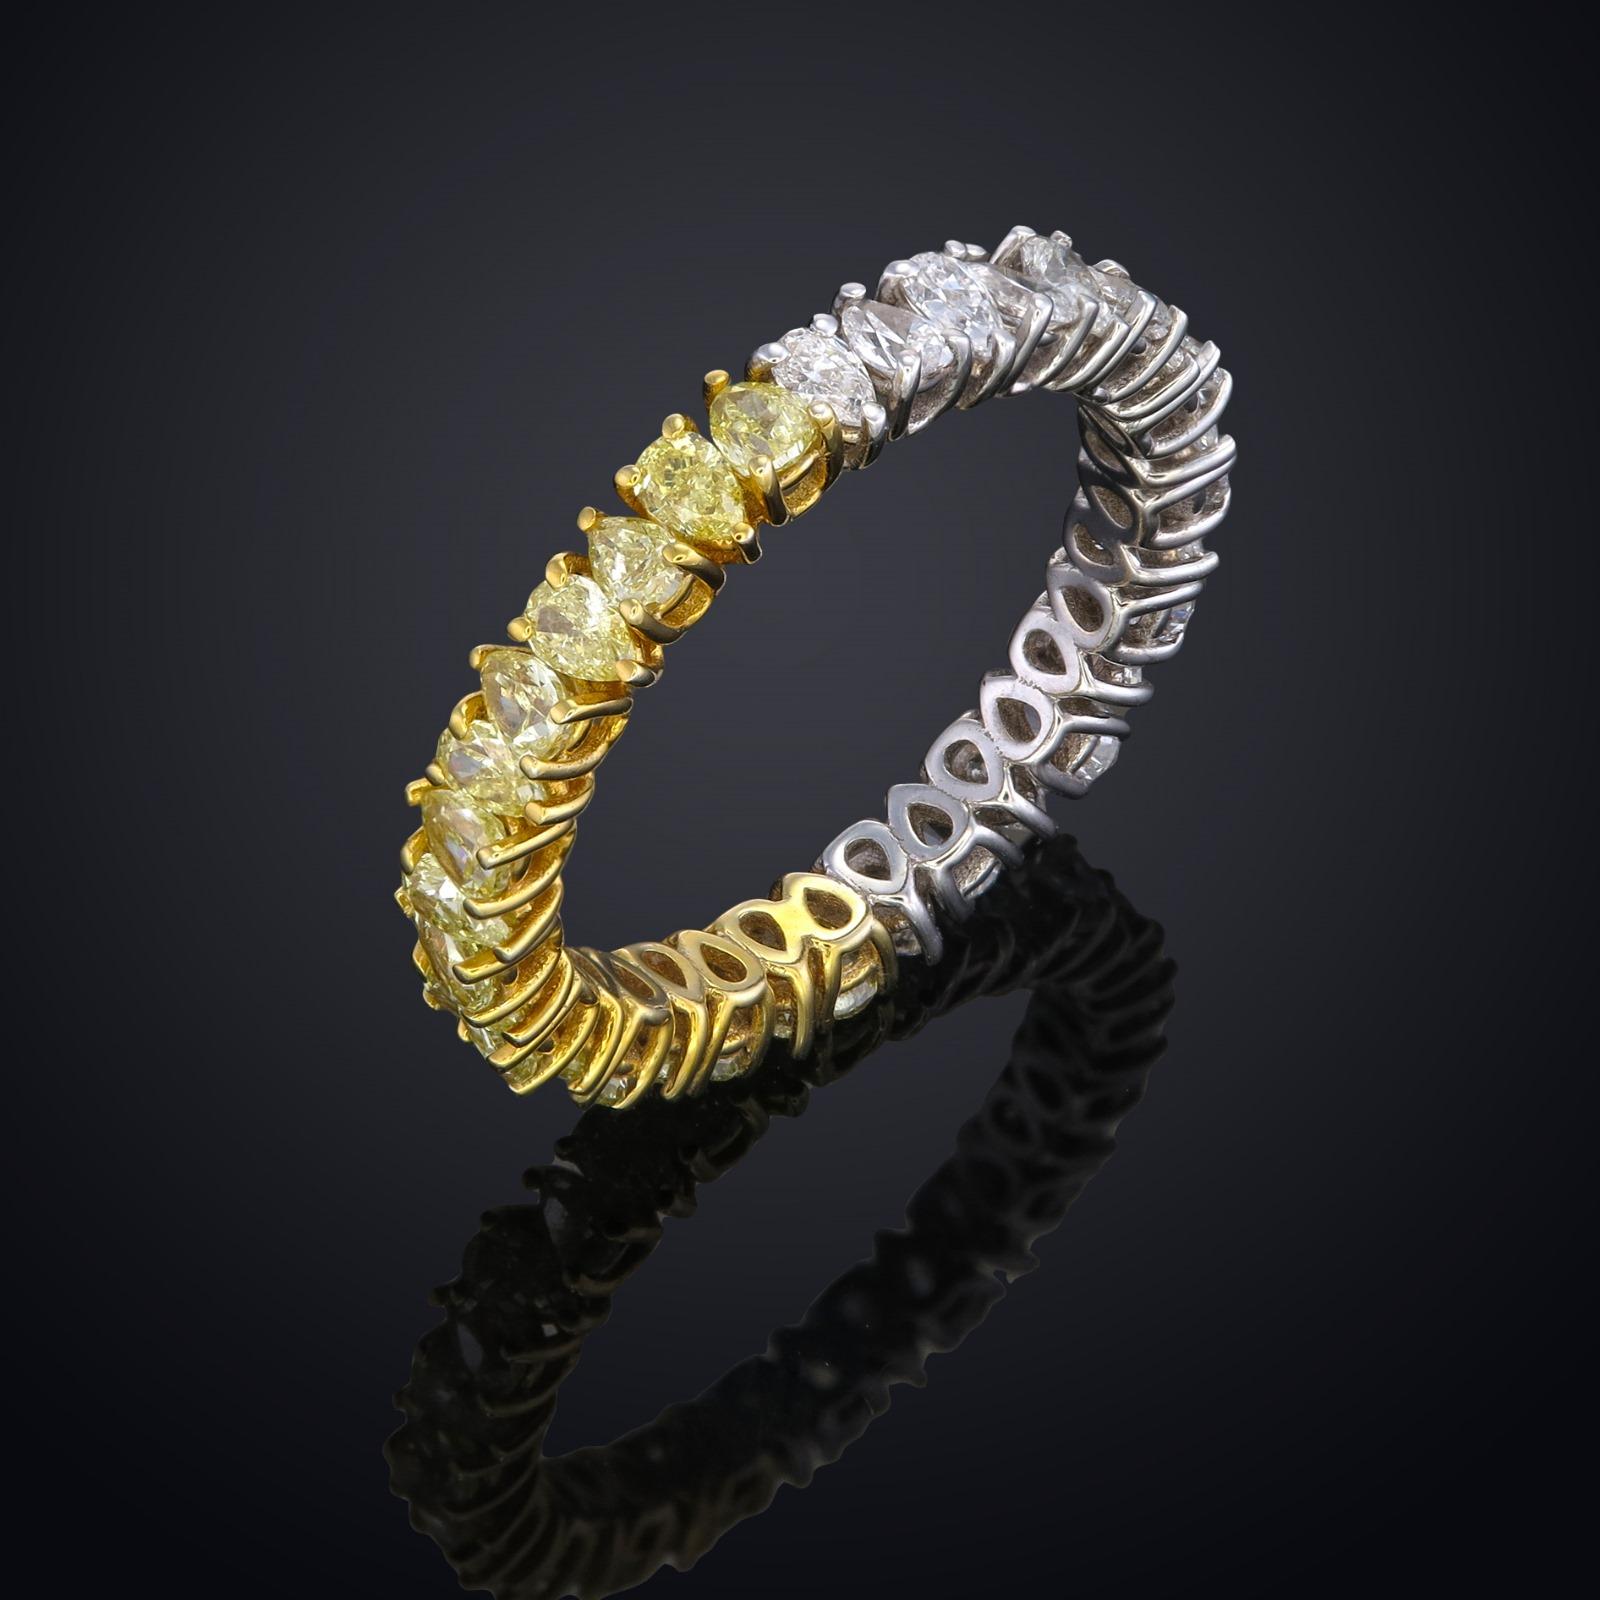 **100% NATURAL FANCY COLOUR DIAMOND JEWELRY**

✪ Jewelry Details ✪

Pear FY VVS VS Diamonds - 17 pcs - 1.08 carat

Pear FG VVS VS Diamonds - 17 pcs - 1.06 carat

♦ GROSS WEIGHT: 2.09 grams

➛ Metal Type: 18k Gold
➛ Jewelry Type: Fashion ring, Bridal